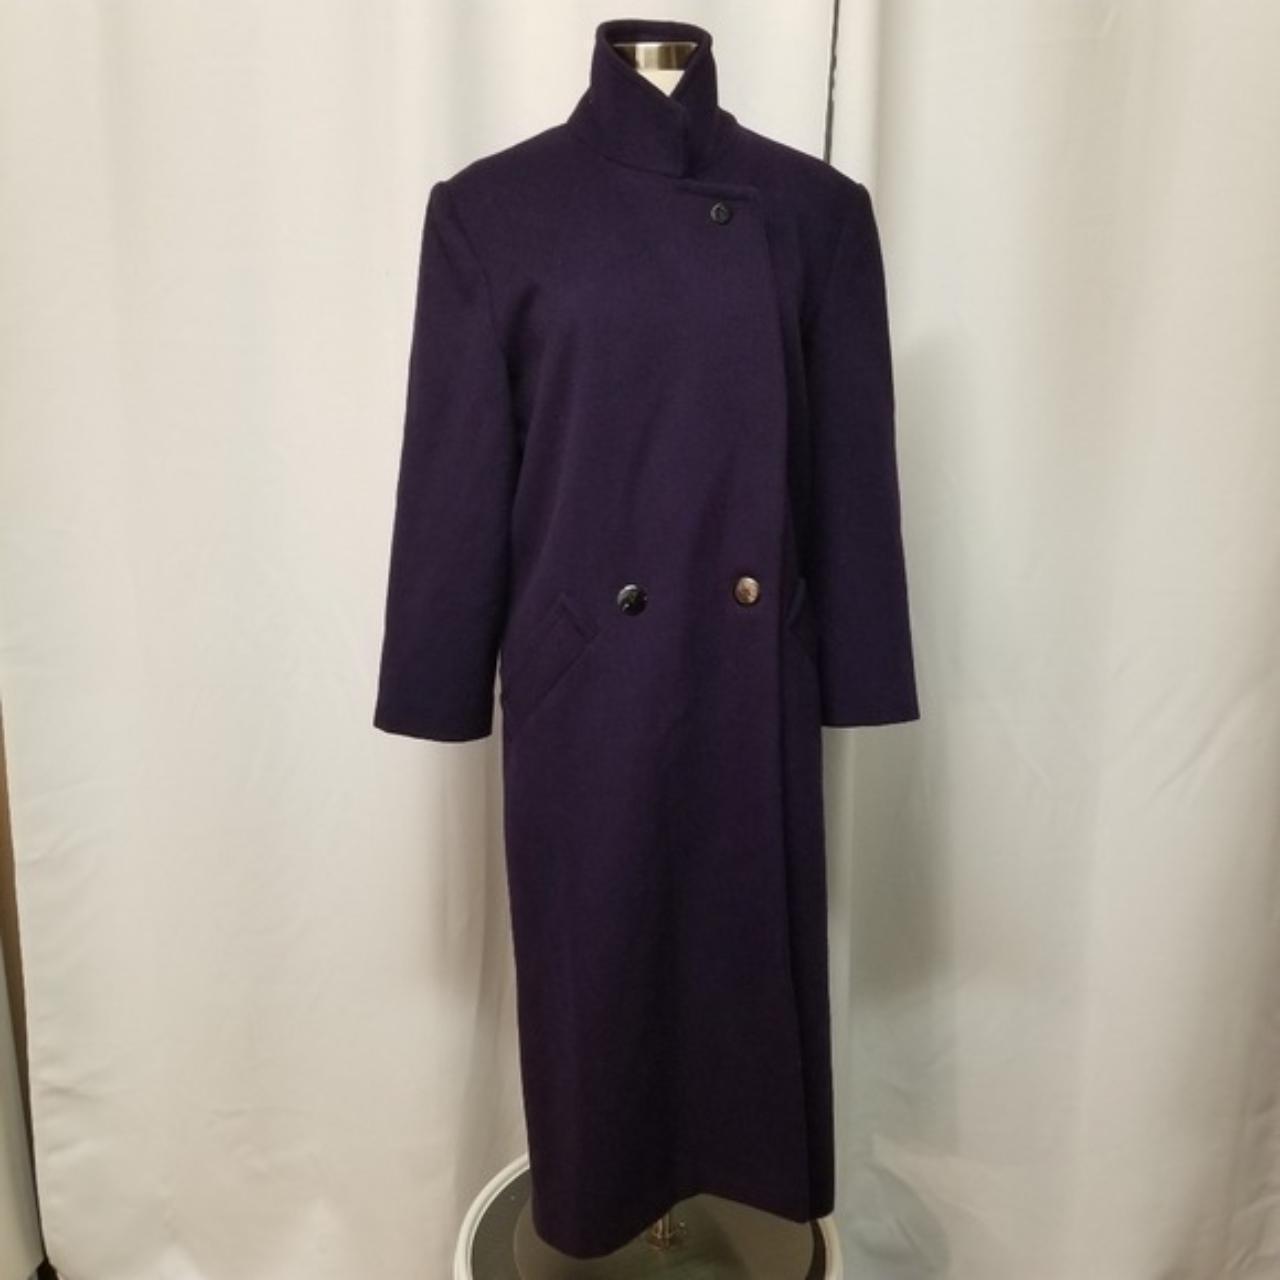 Vintage 80s Retro Billi Royal Purple Wool Blend Long... - Depop